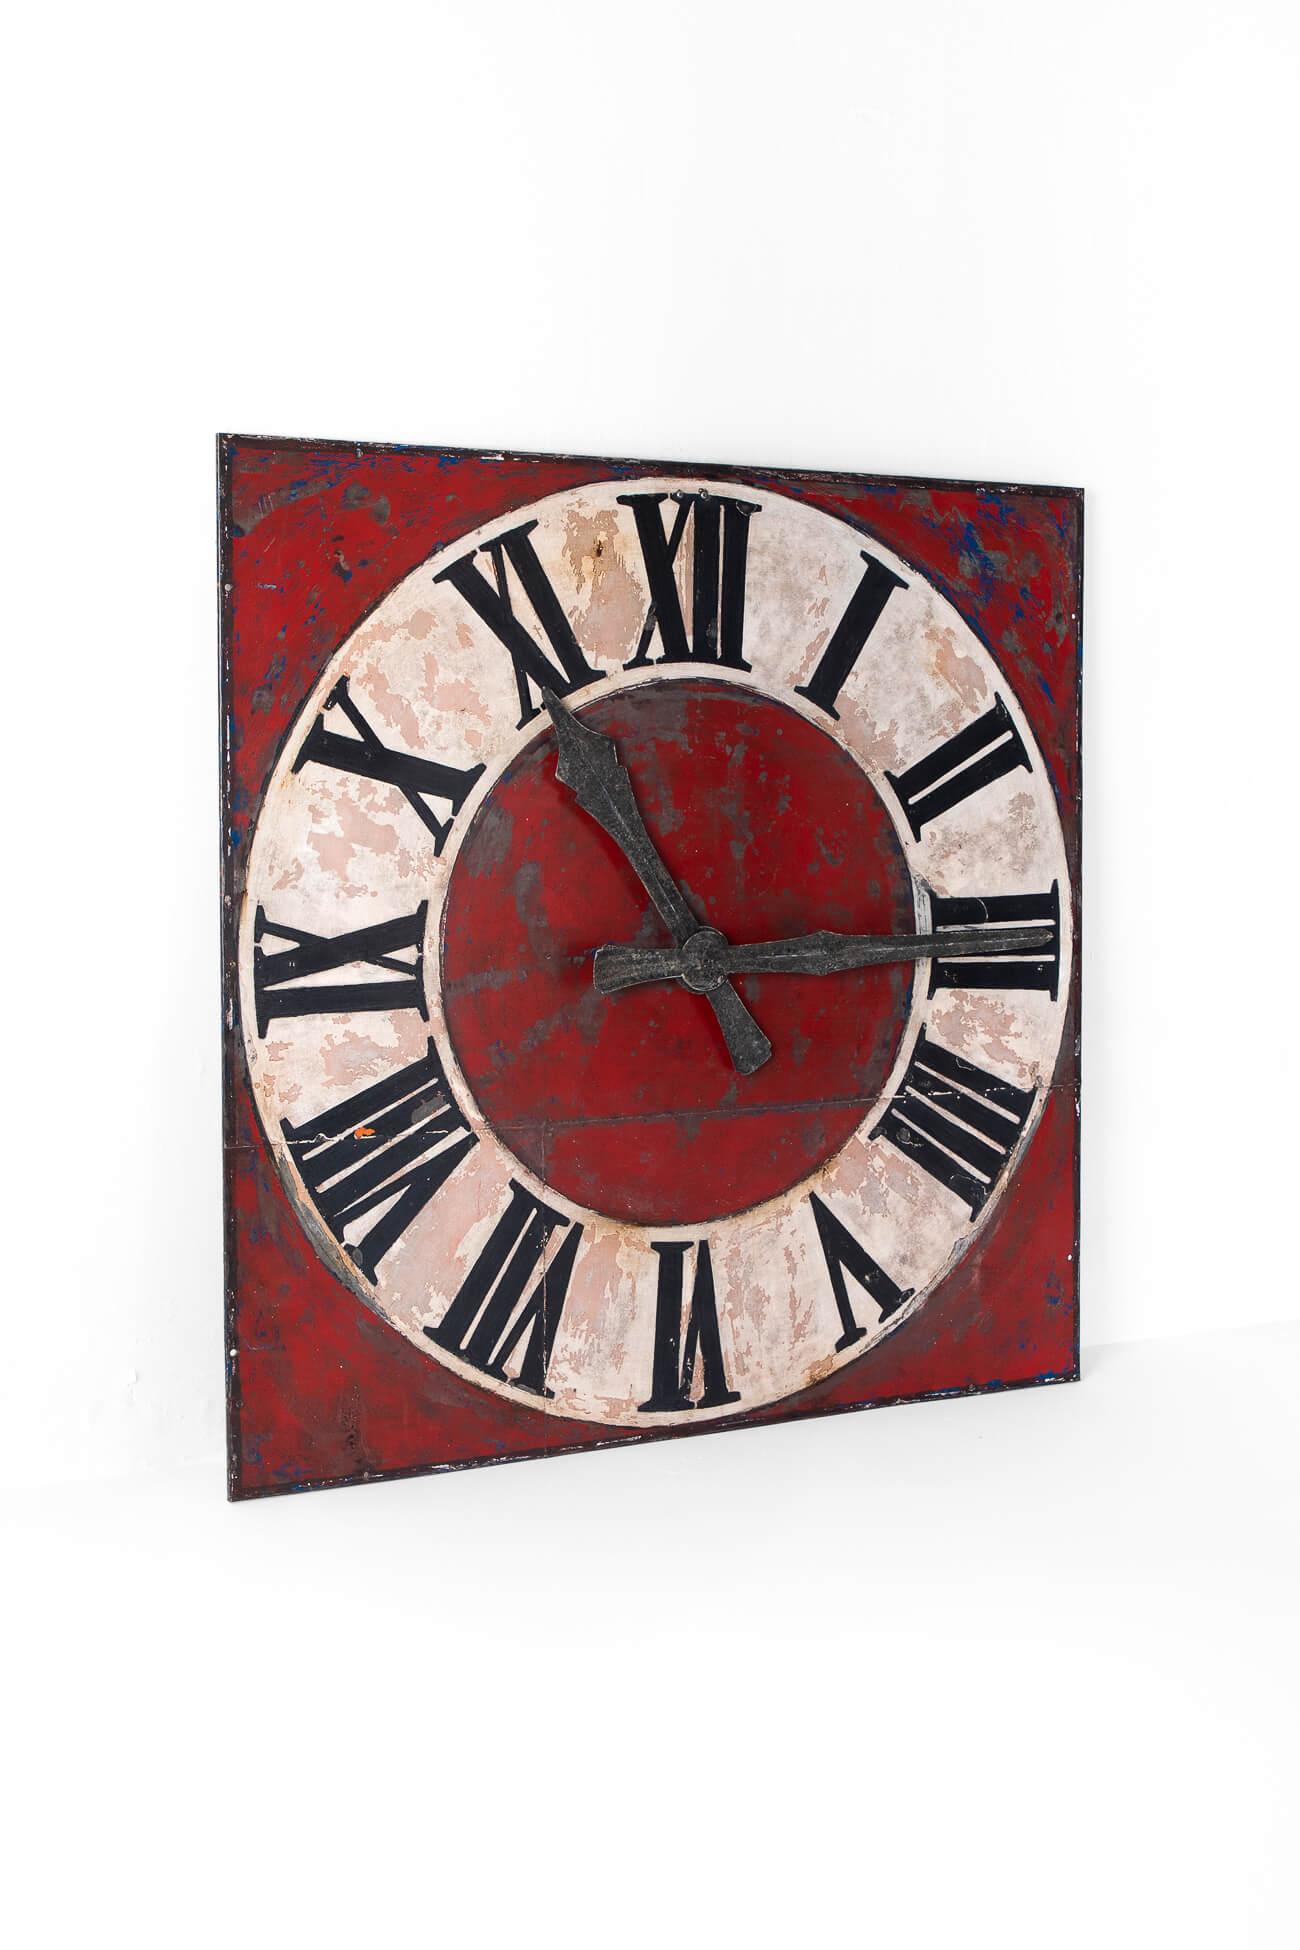 High Victorian 19th Century Church Clock Face For Sale